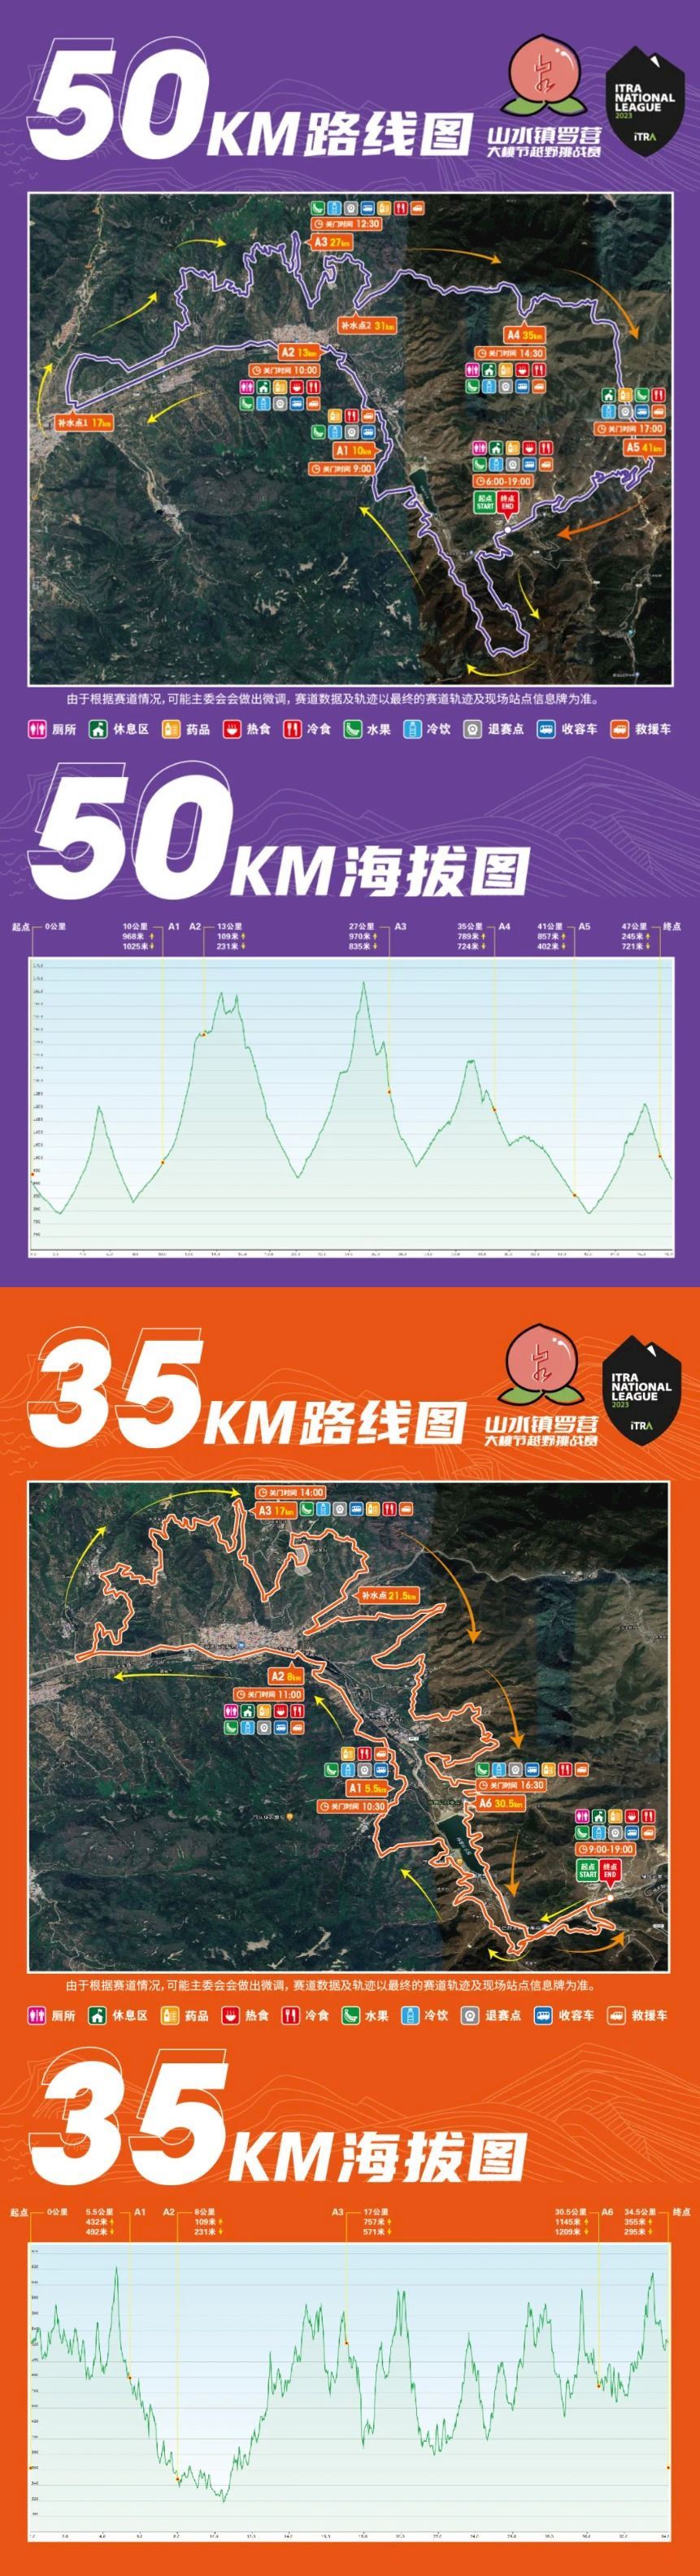 Beijing Zhenluoying Trail Challenge Routenkarte